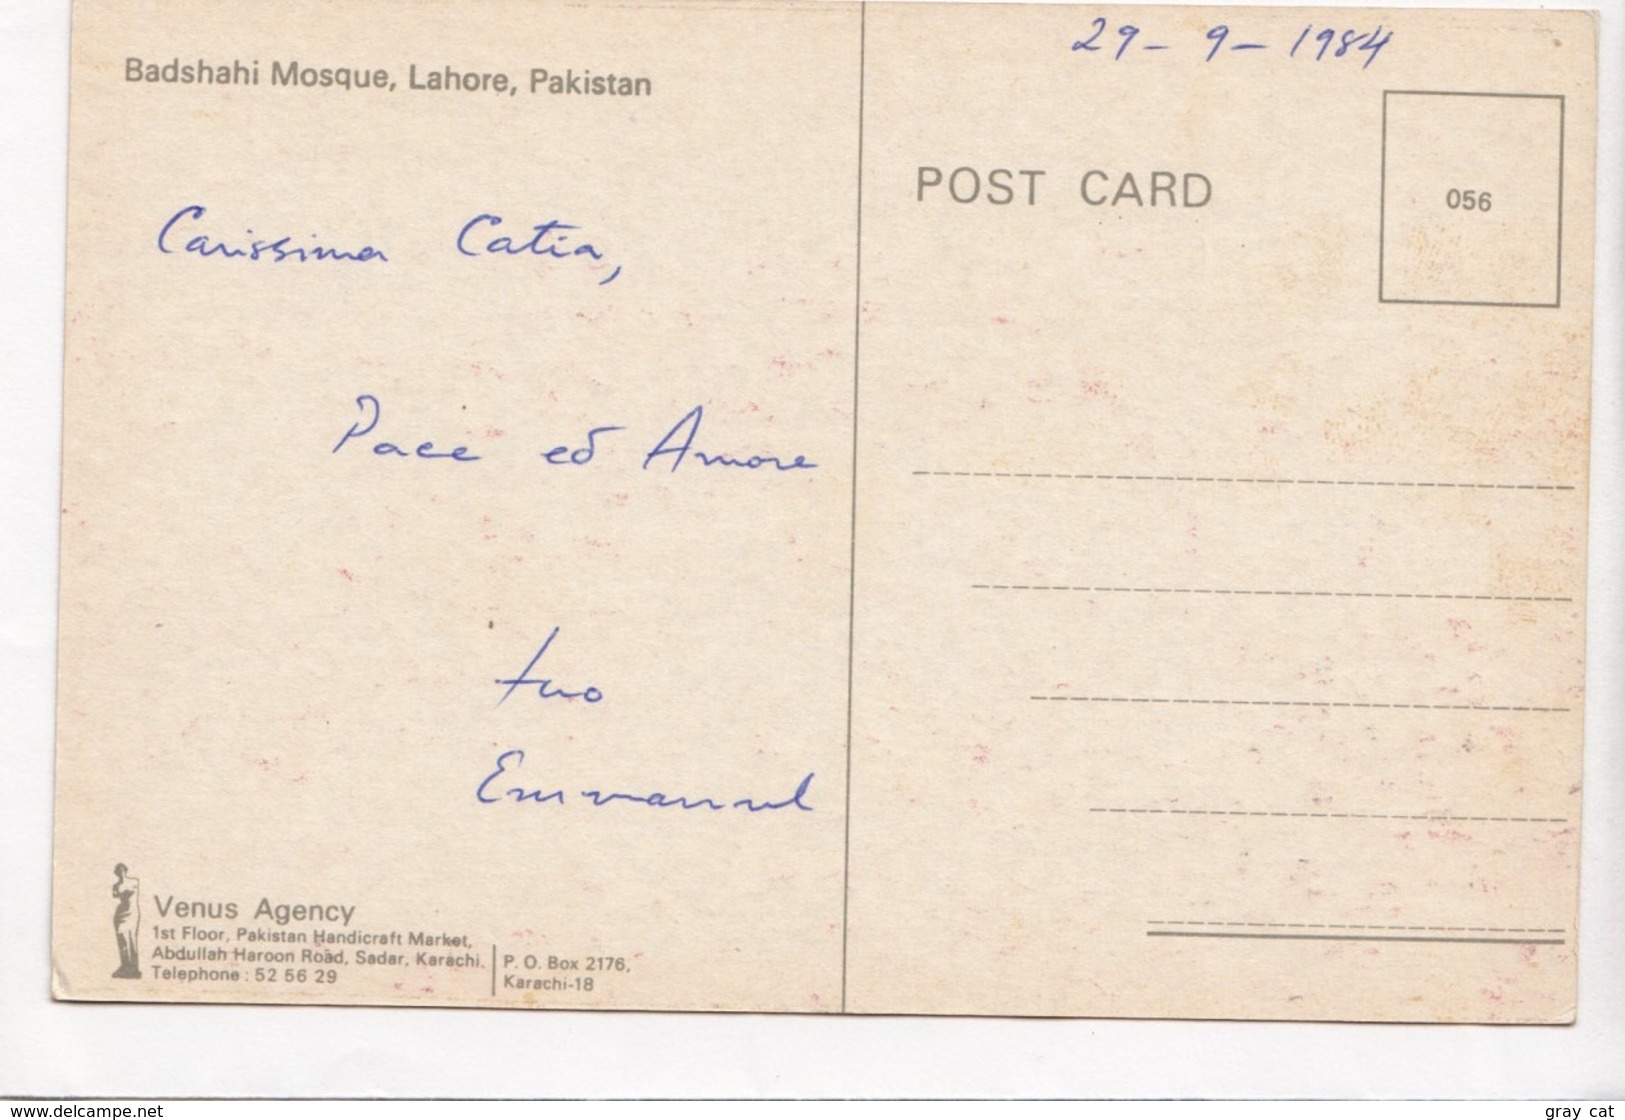 Badshahi Mosque, Lahore, Pakistan, 1984 Used Postcard [23696] - Pakistan